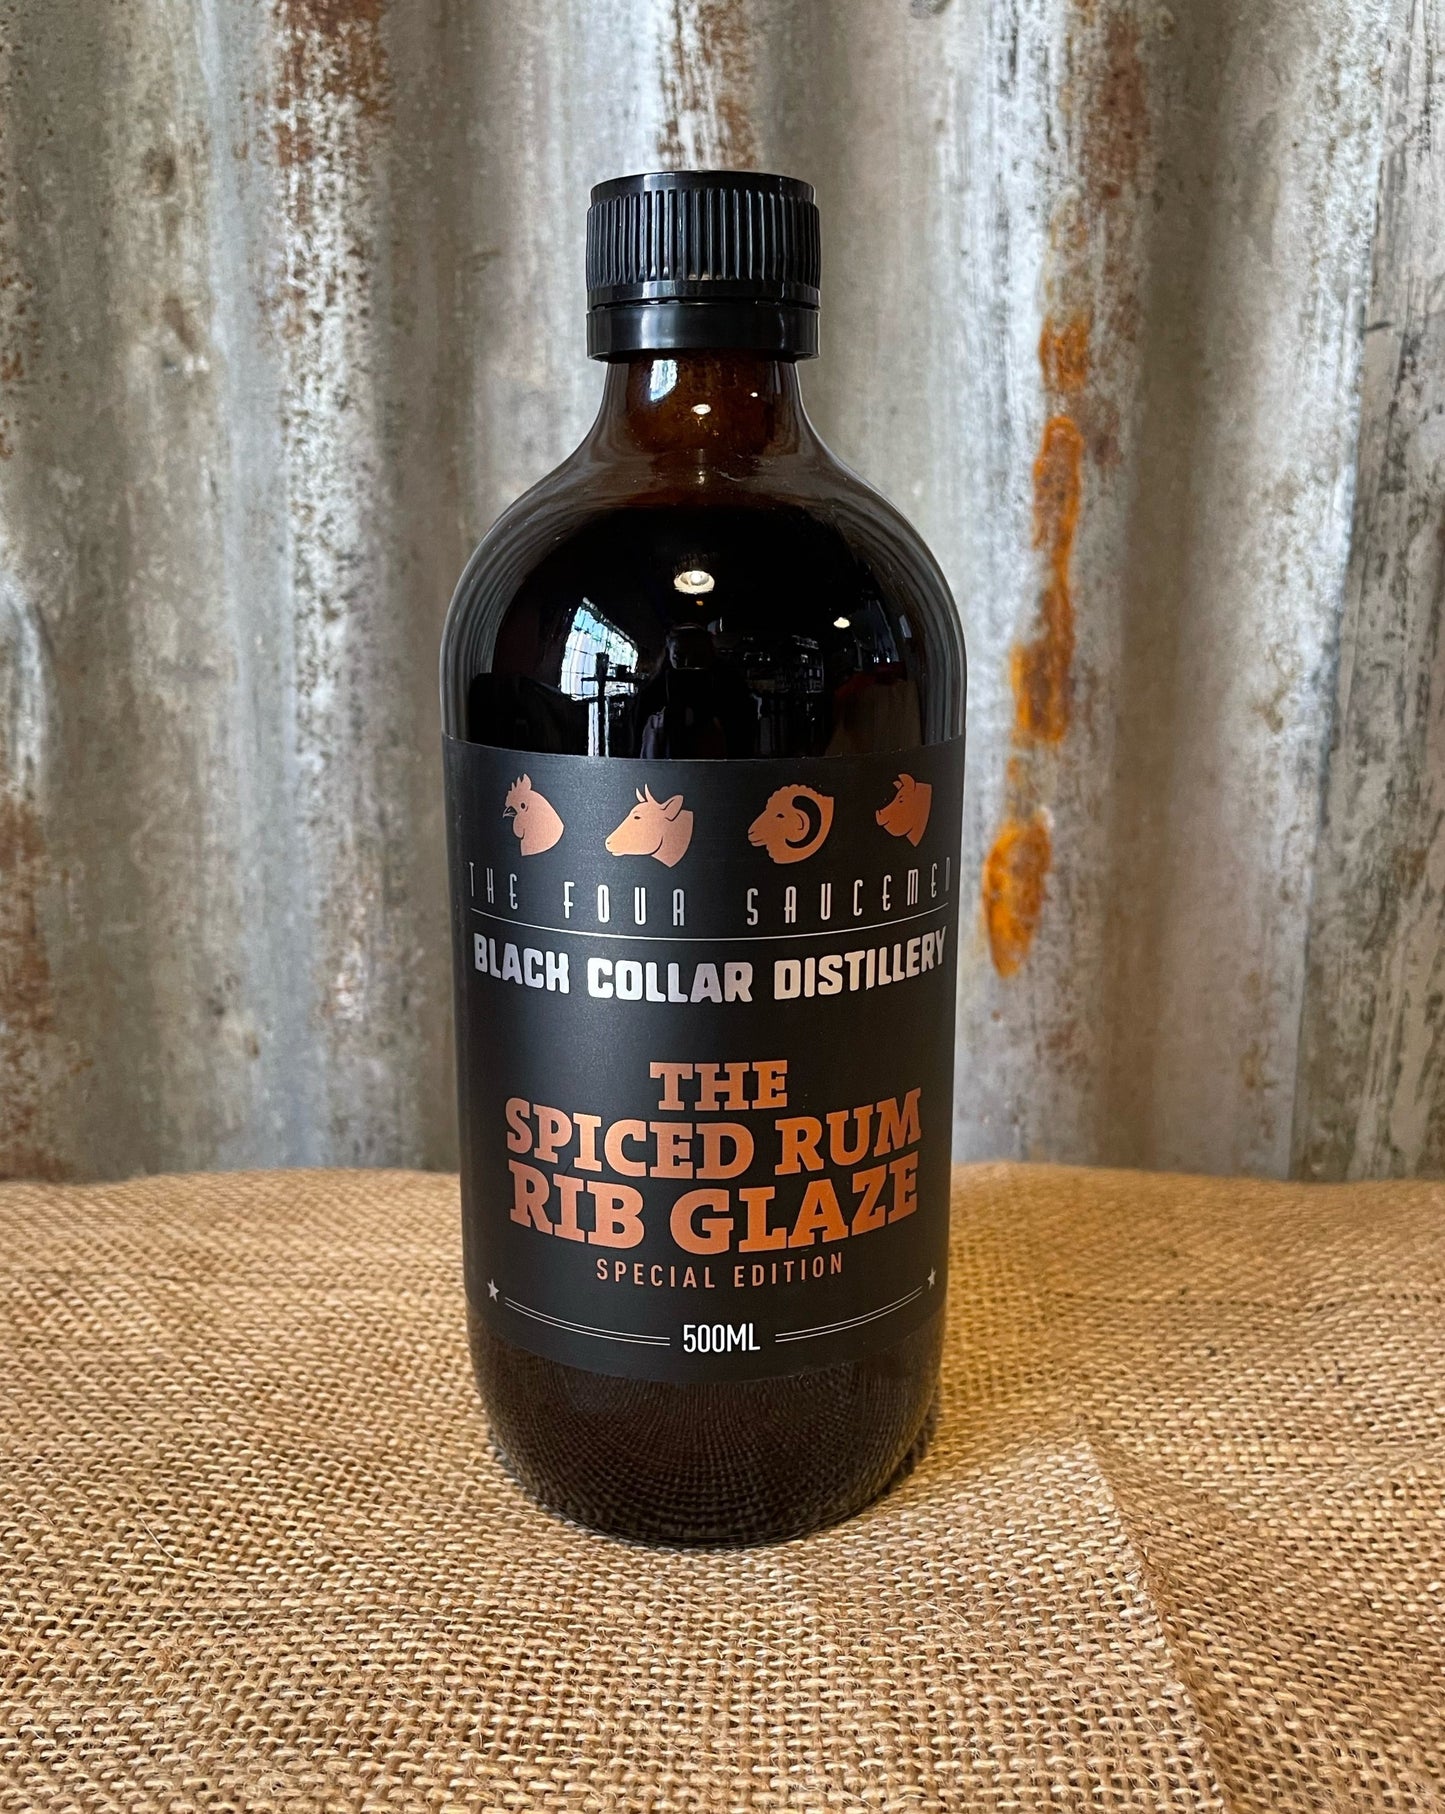 The Four Saucemen - The Spiced Rum Rib Glaze 500ml